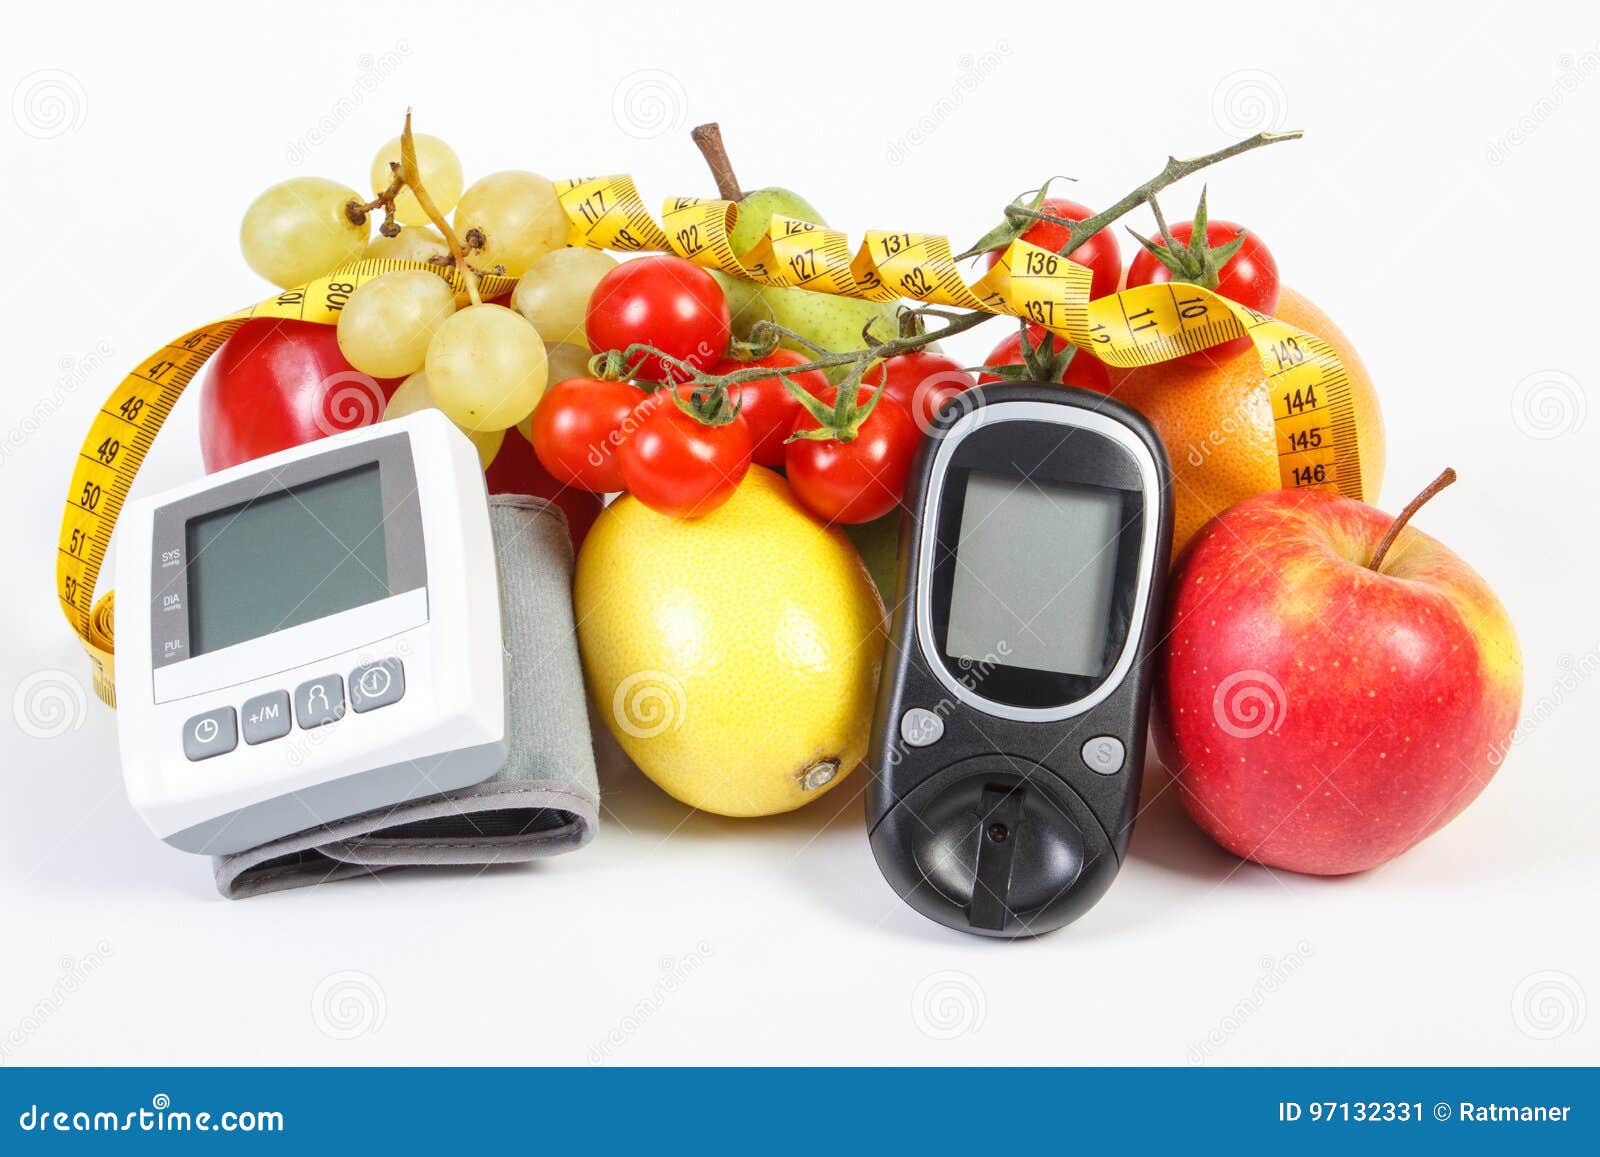 https://thumbs.dreamstime.com/z/glucose-meter-blood-pressure-monitor-fruits-vegetables-centimeter-healthy-lifestyle-glucometer-fresh-tape-measure-concept-97132331.jpg